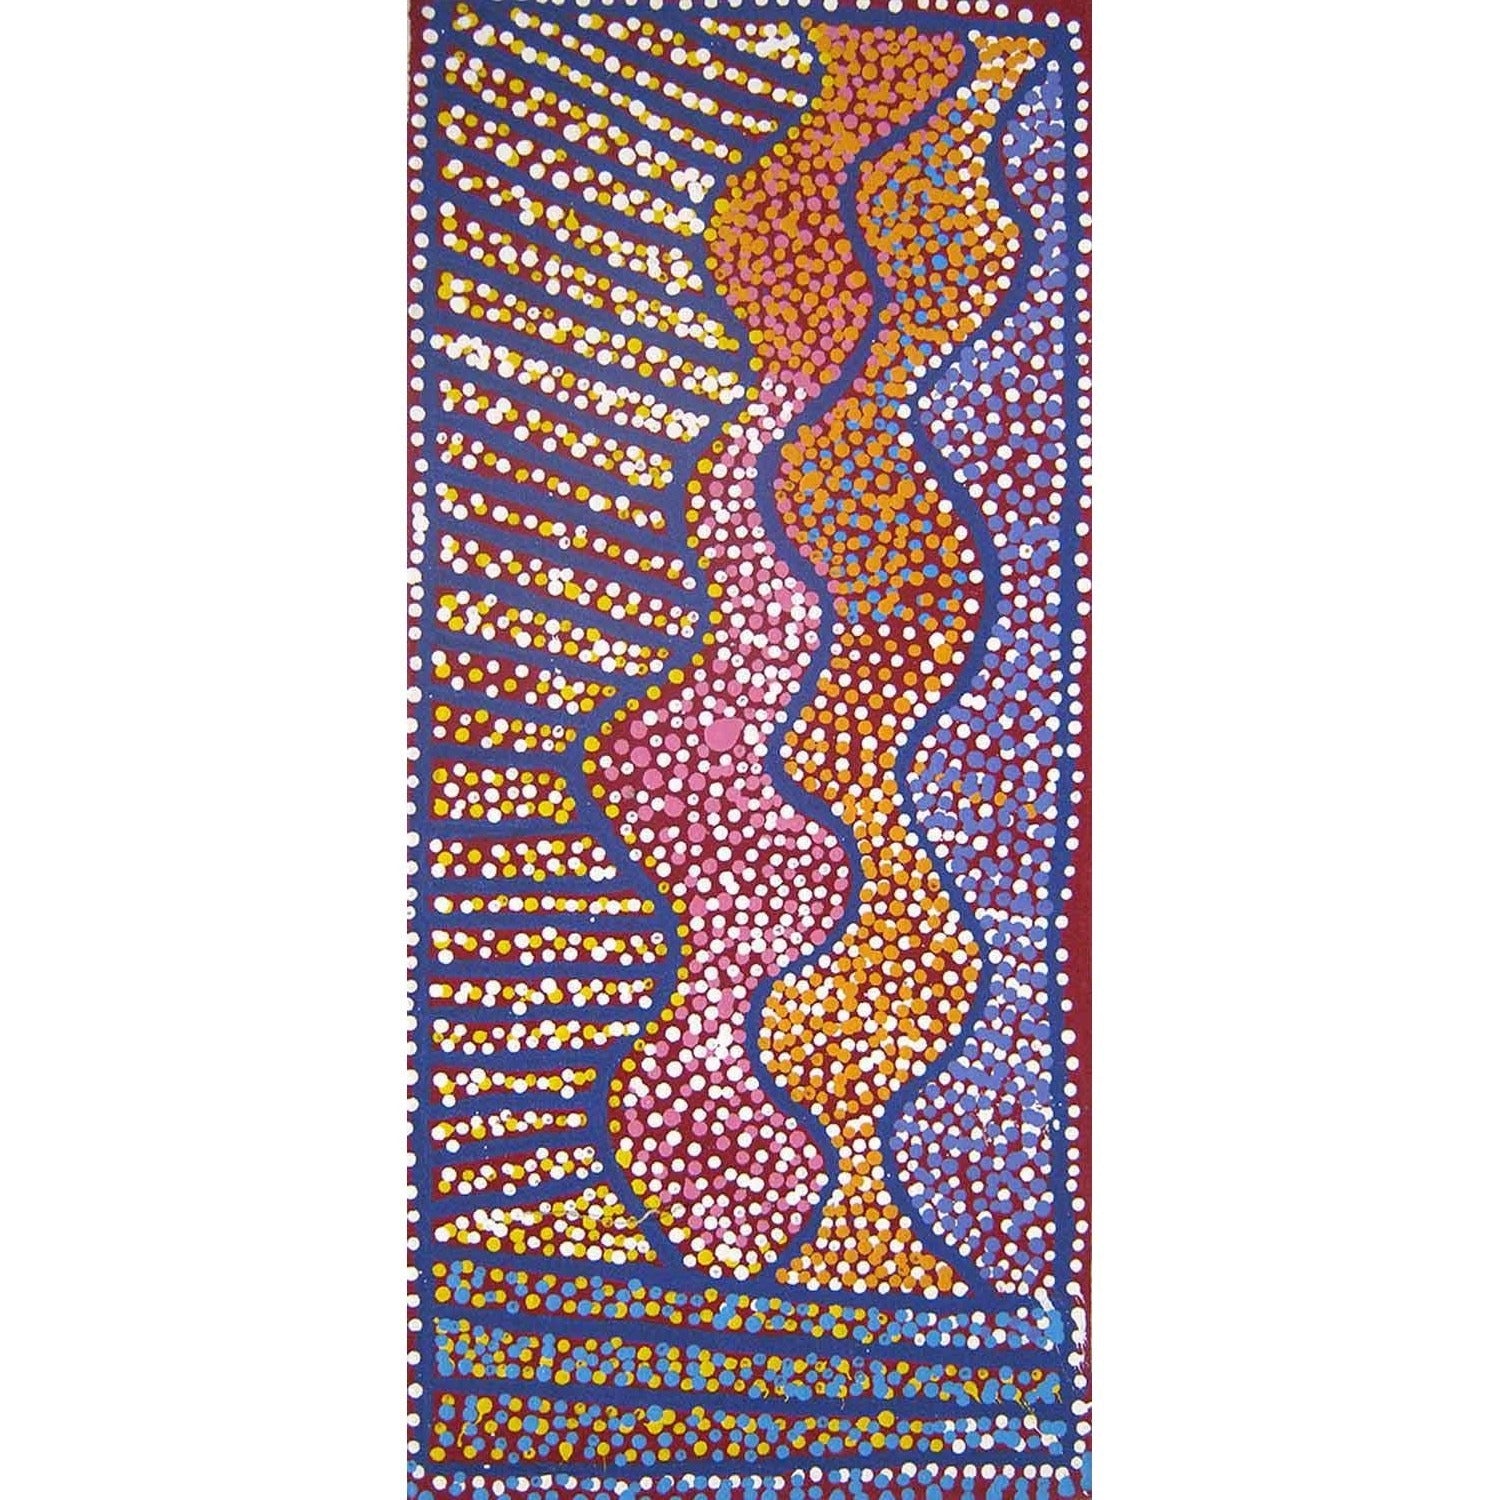 Shorty Jangala Robertson paintings - Indigenous Art Brisbane